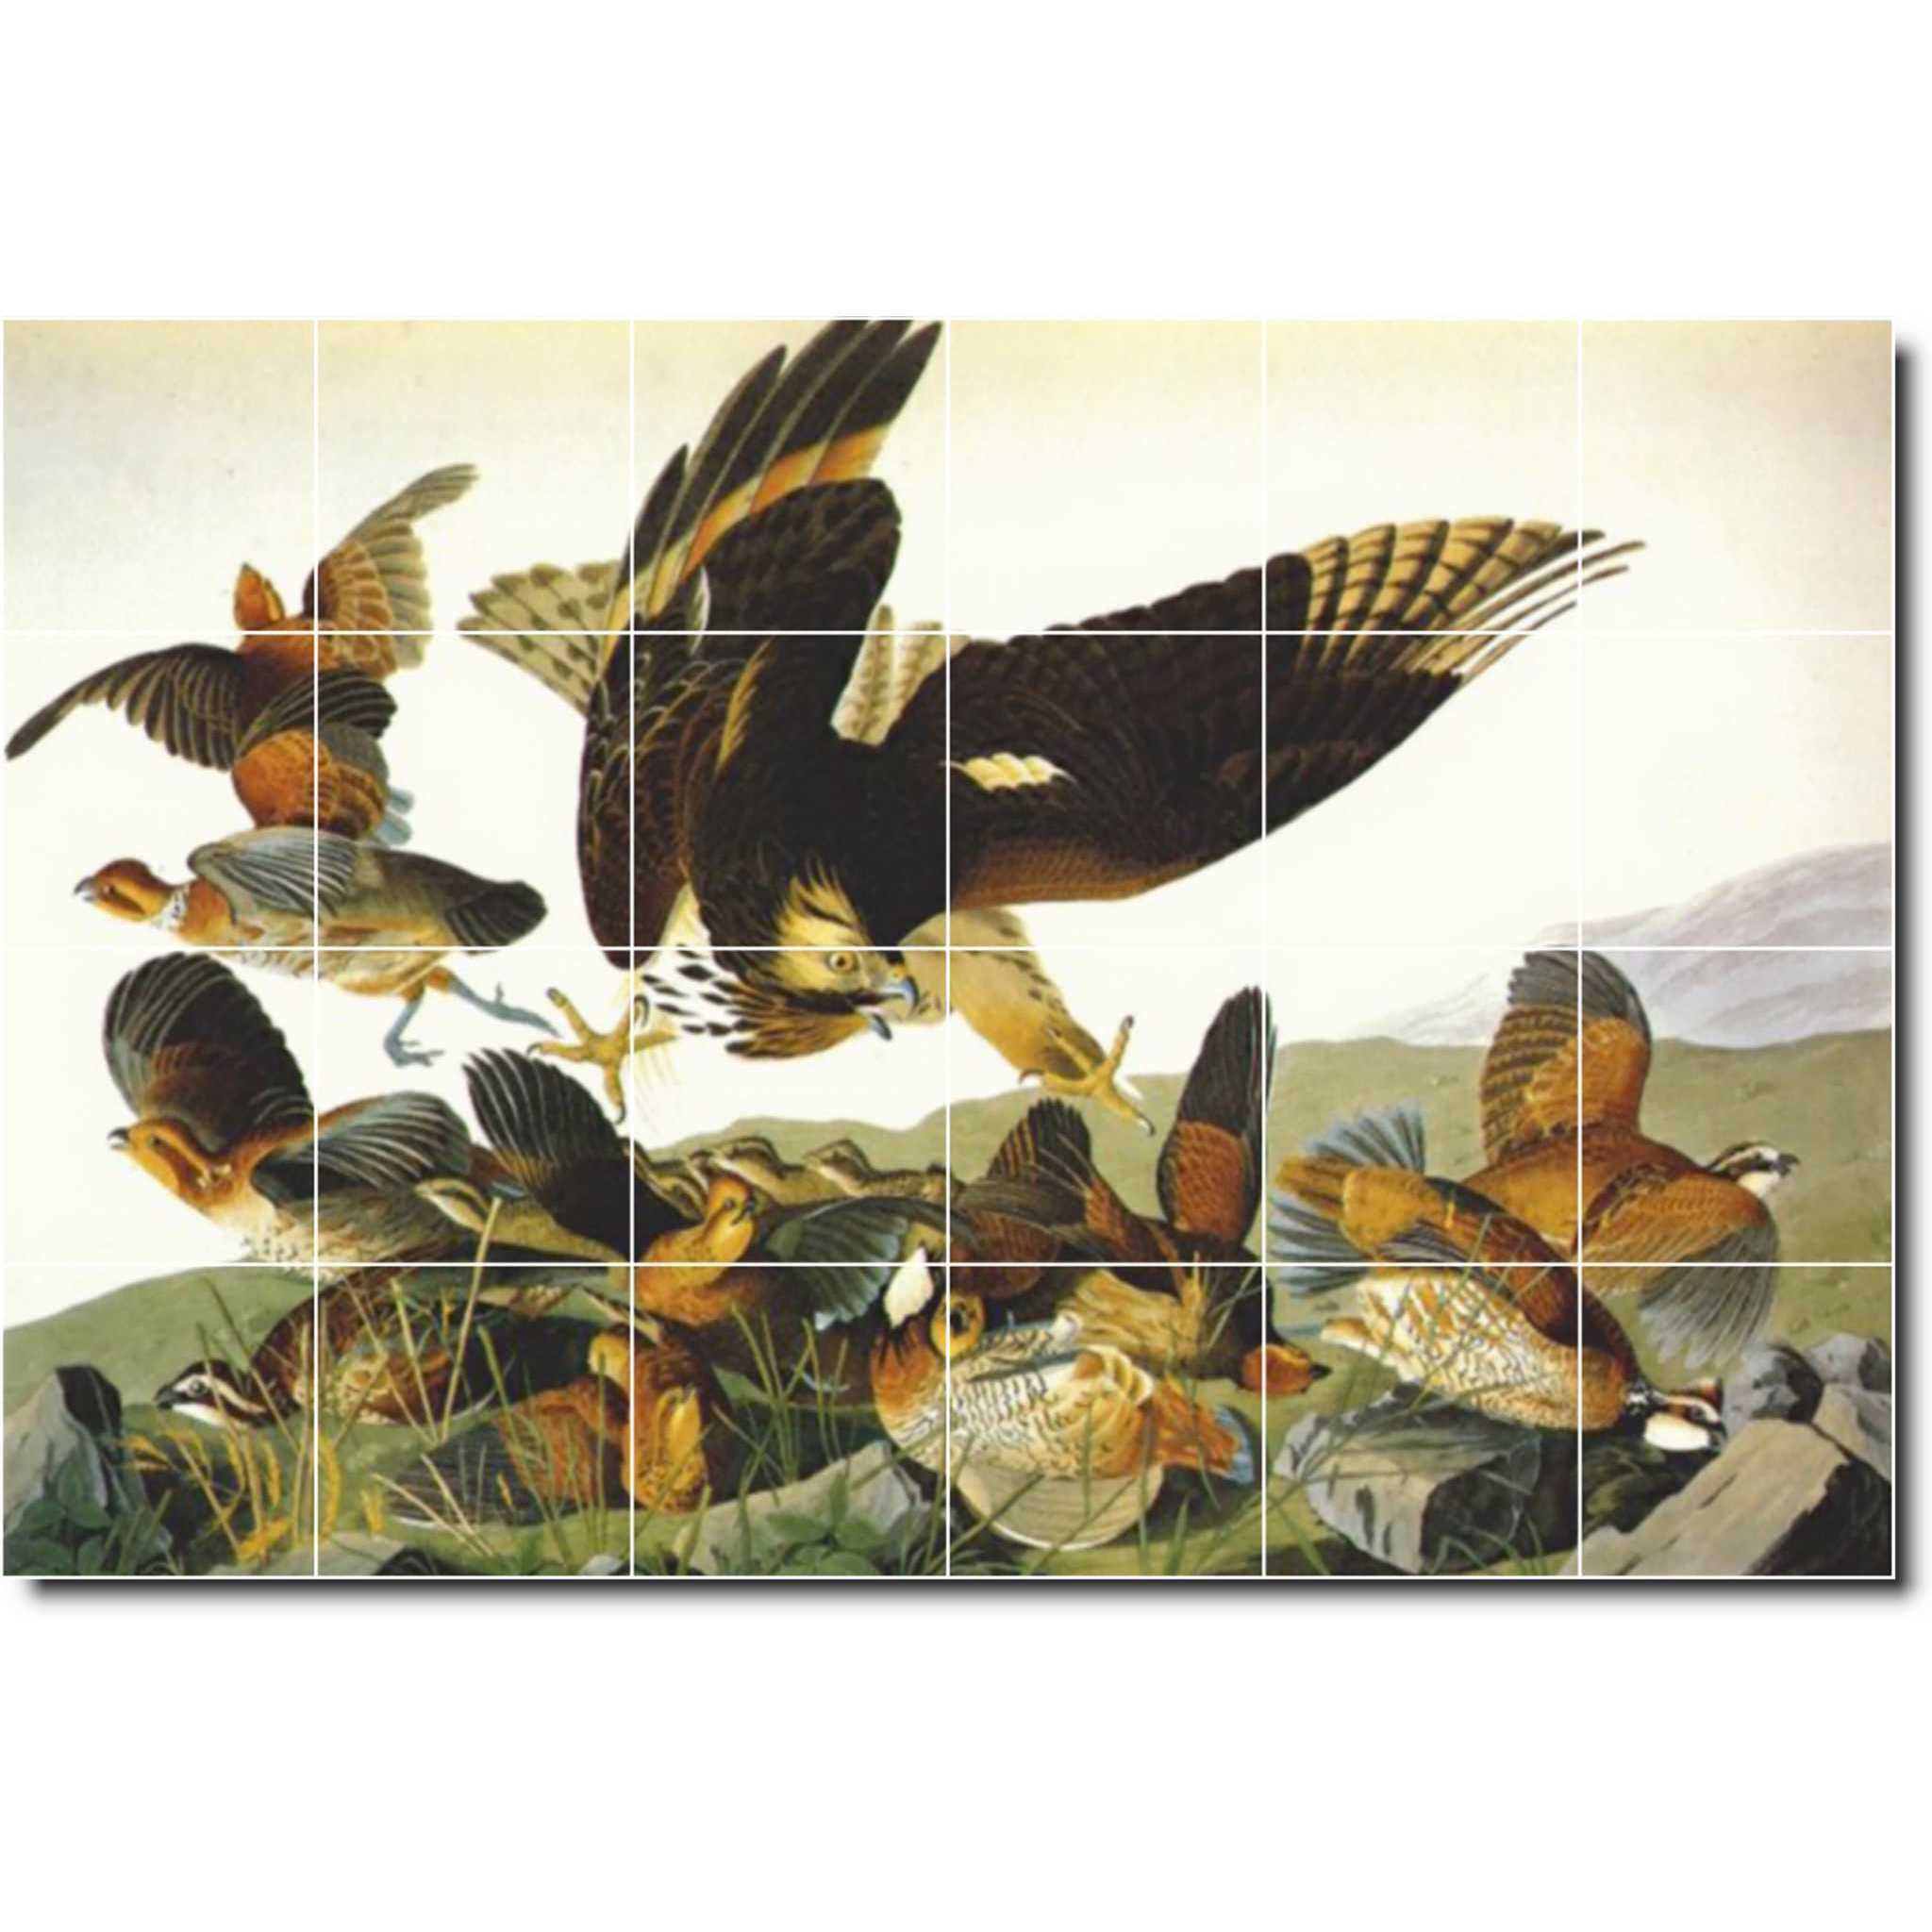 john audubon bird painting ceramic tile mural p00291